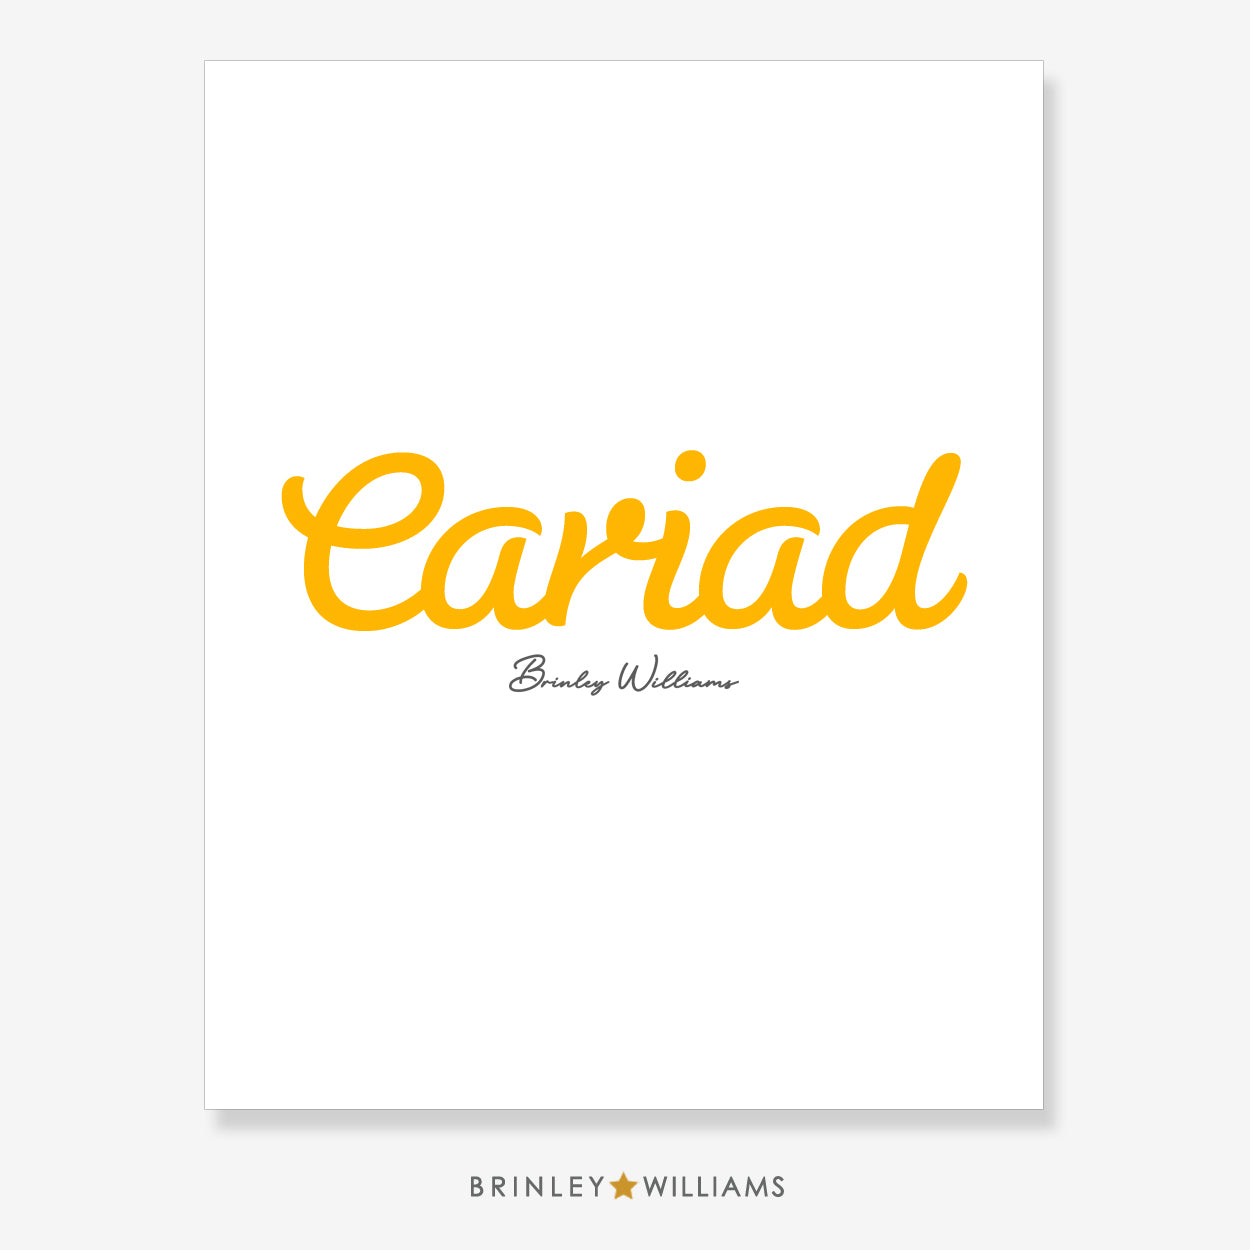 Cariad Wall Art Poster - Yellow